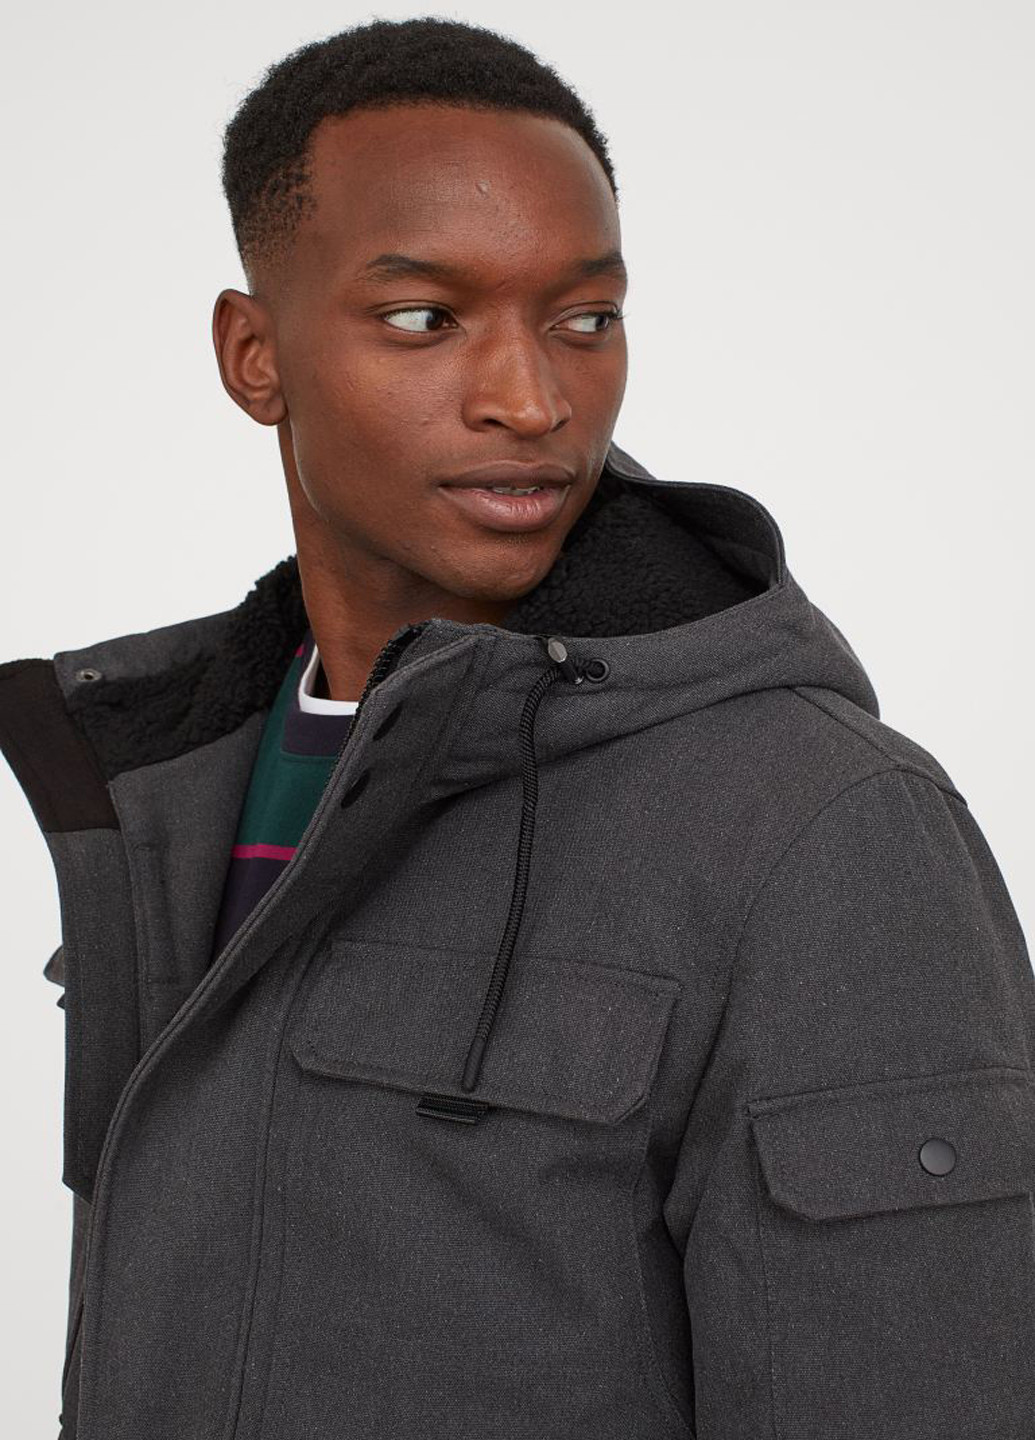 Темно-серая зимняя куртка H&M